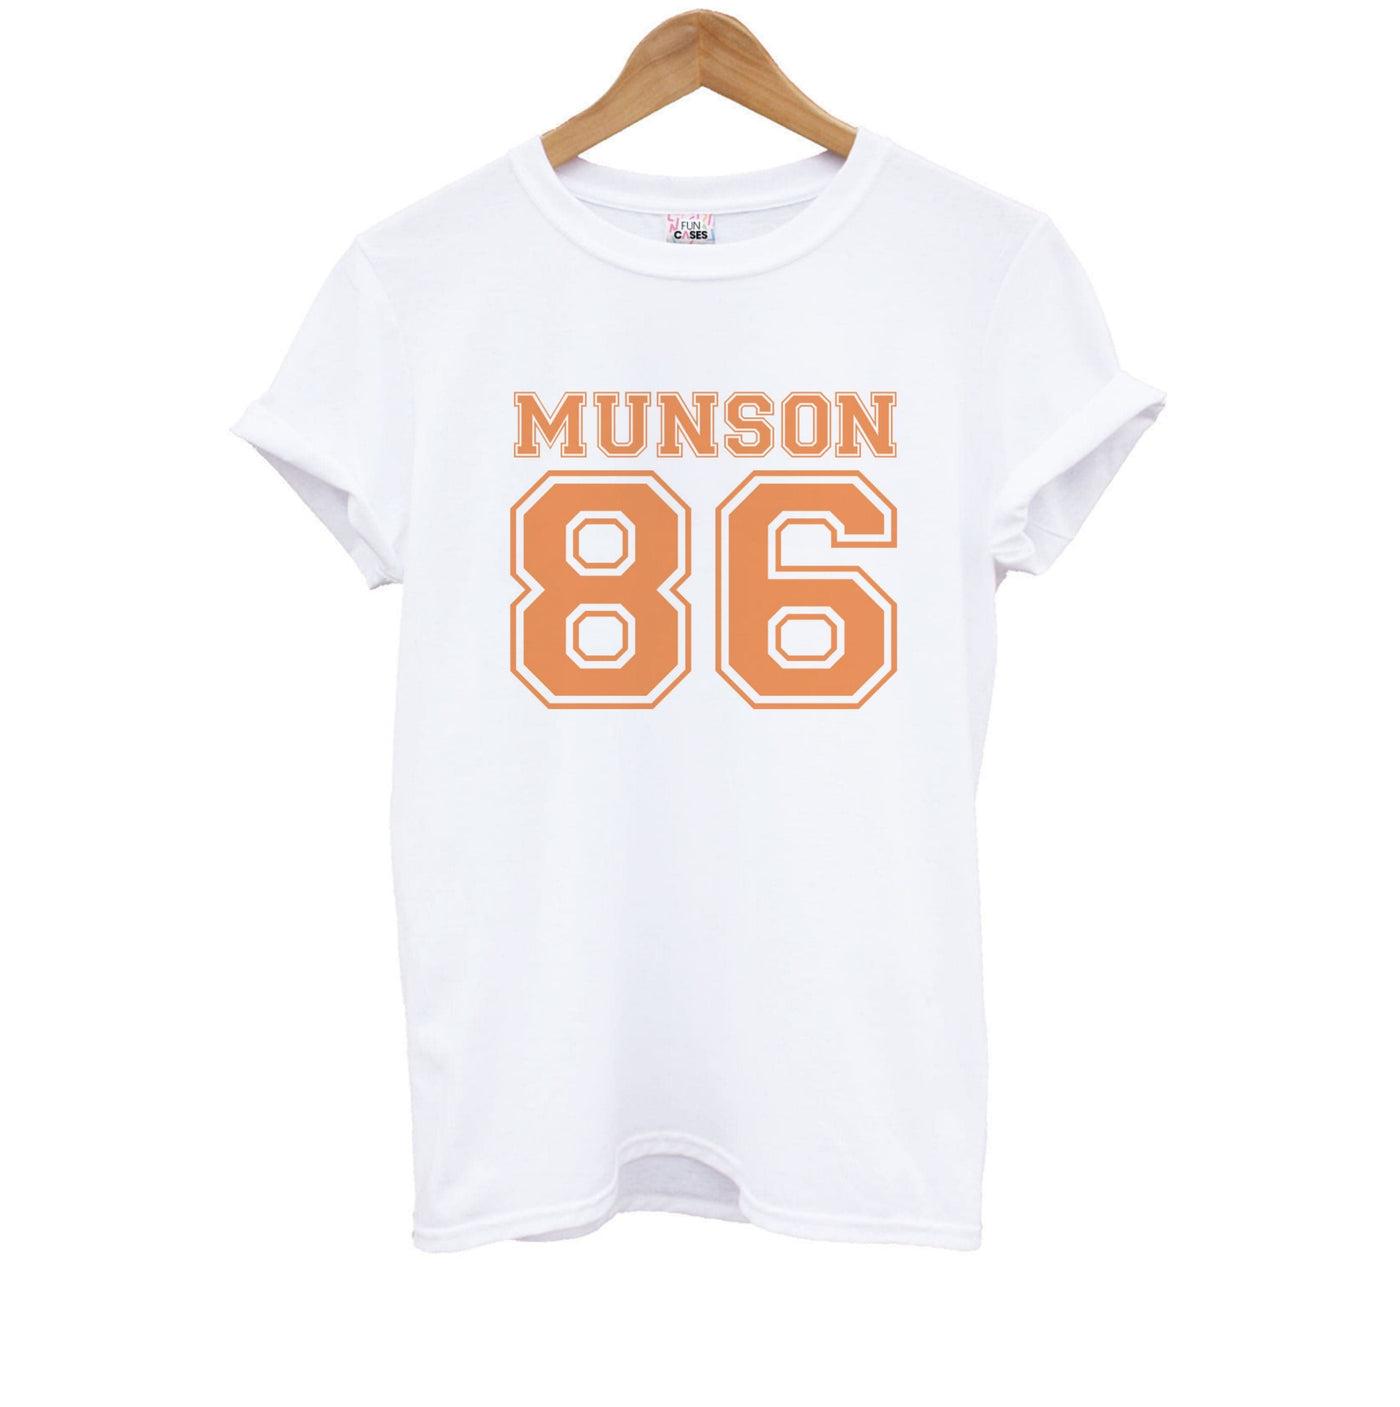 Eddie Munson 86 - Orange Kids T-Shirt